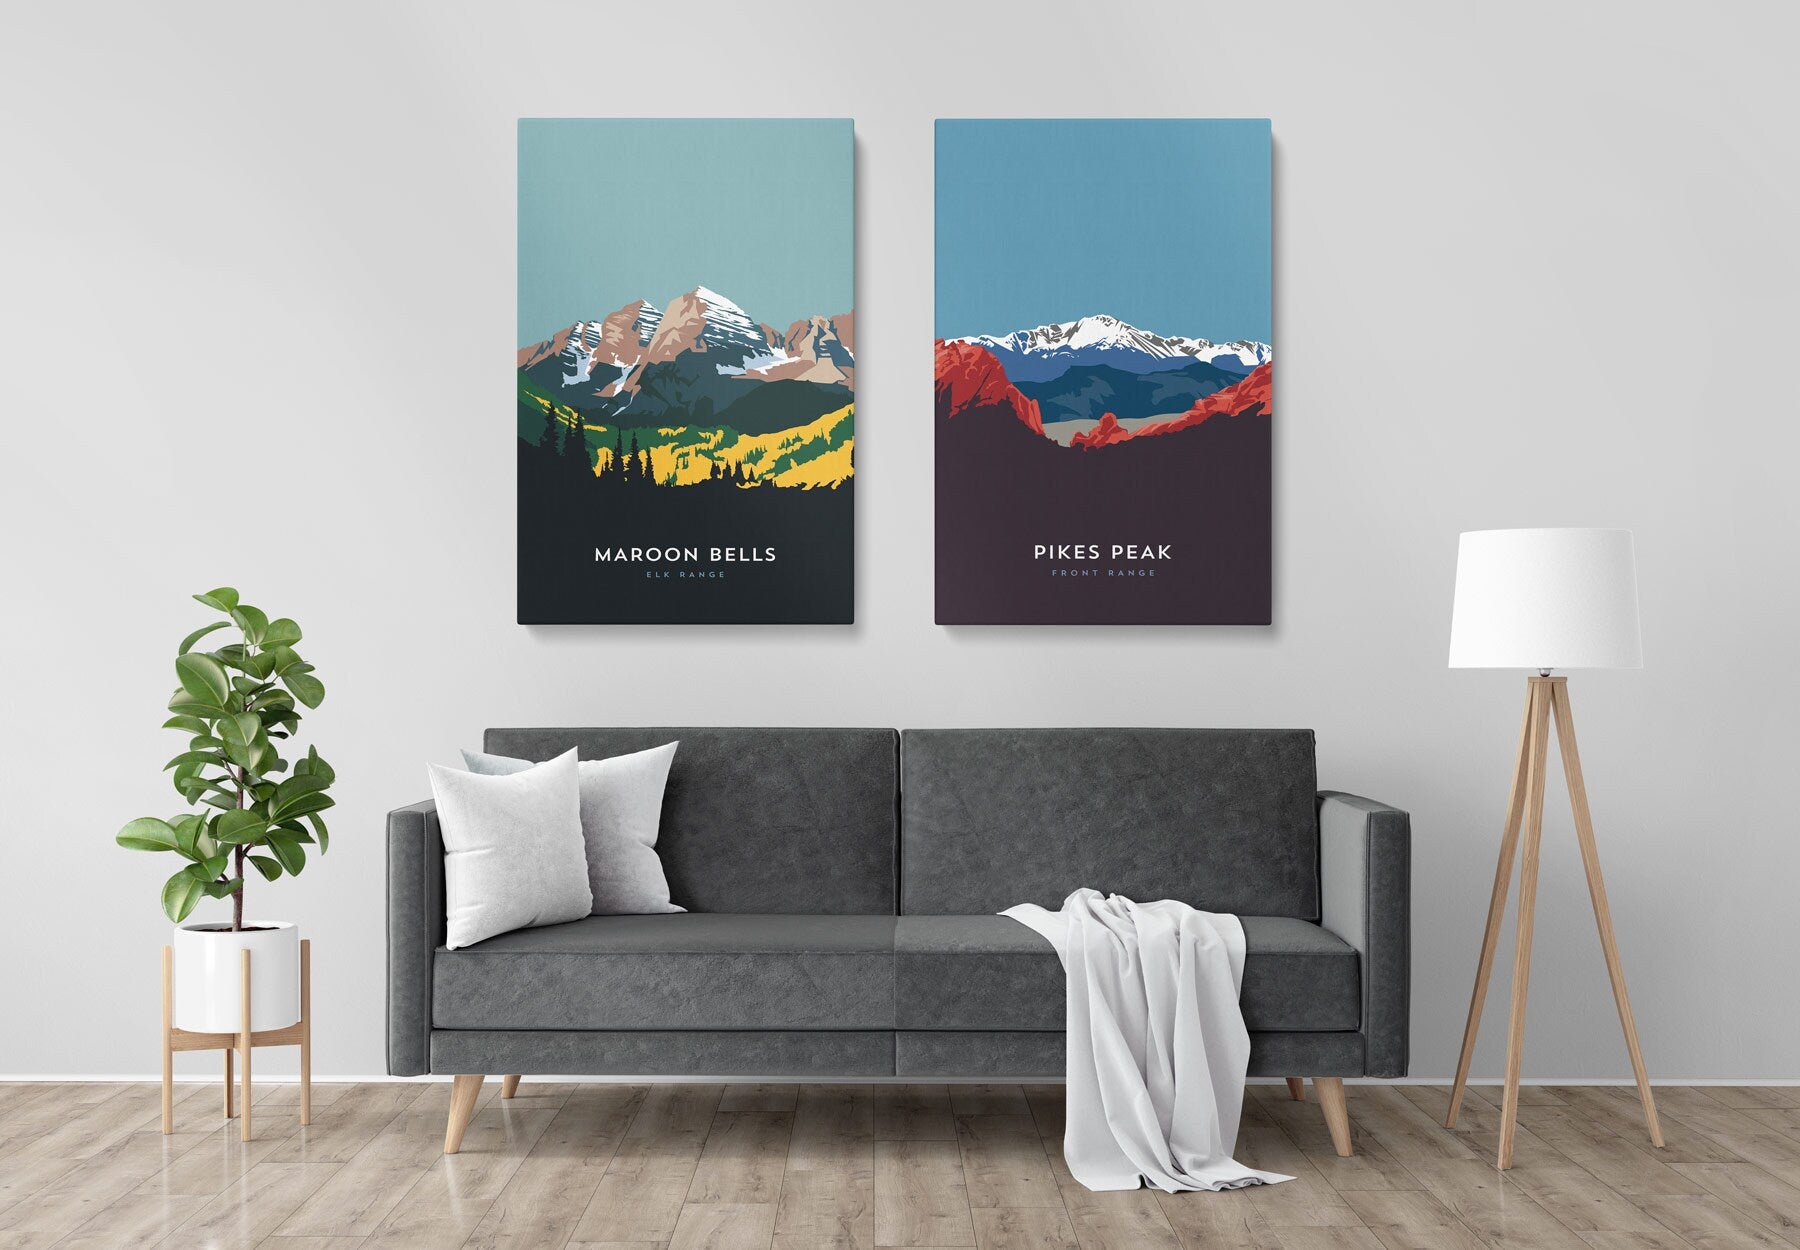 Mount Bierstadt Sawtooth Ridge Colorado 14er Canvas Print